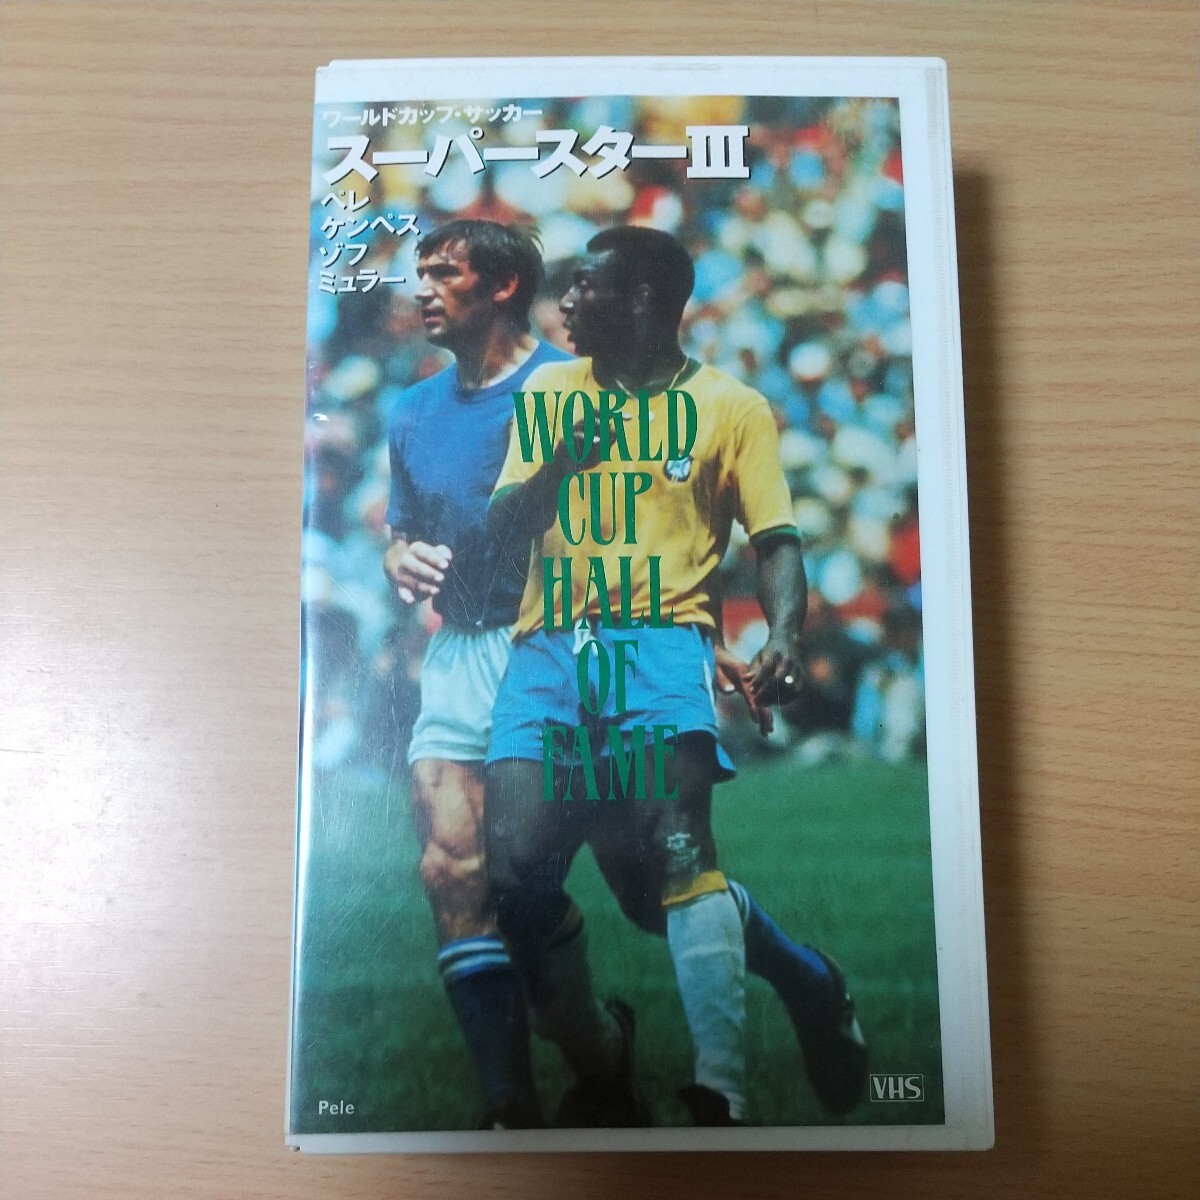  World Cup футбол super Star Ⅲ VHS видео Pele талон peszofmyula- в аренду выше товар воспроизведение подтверждено 